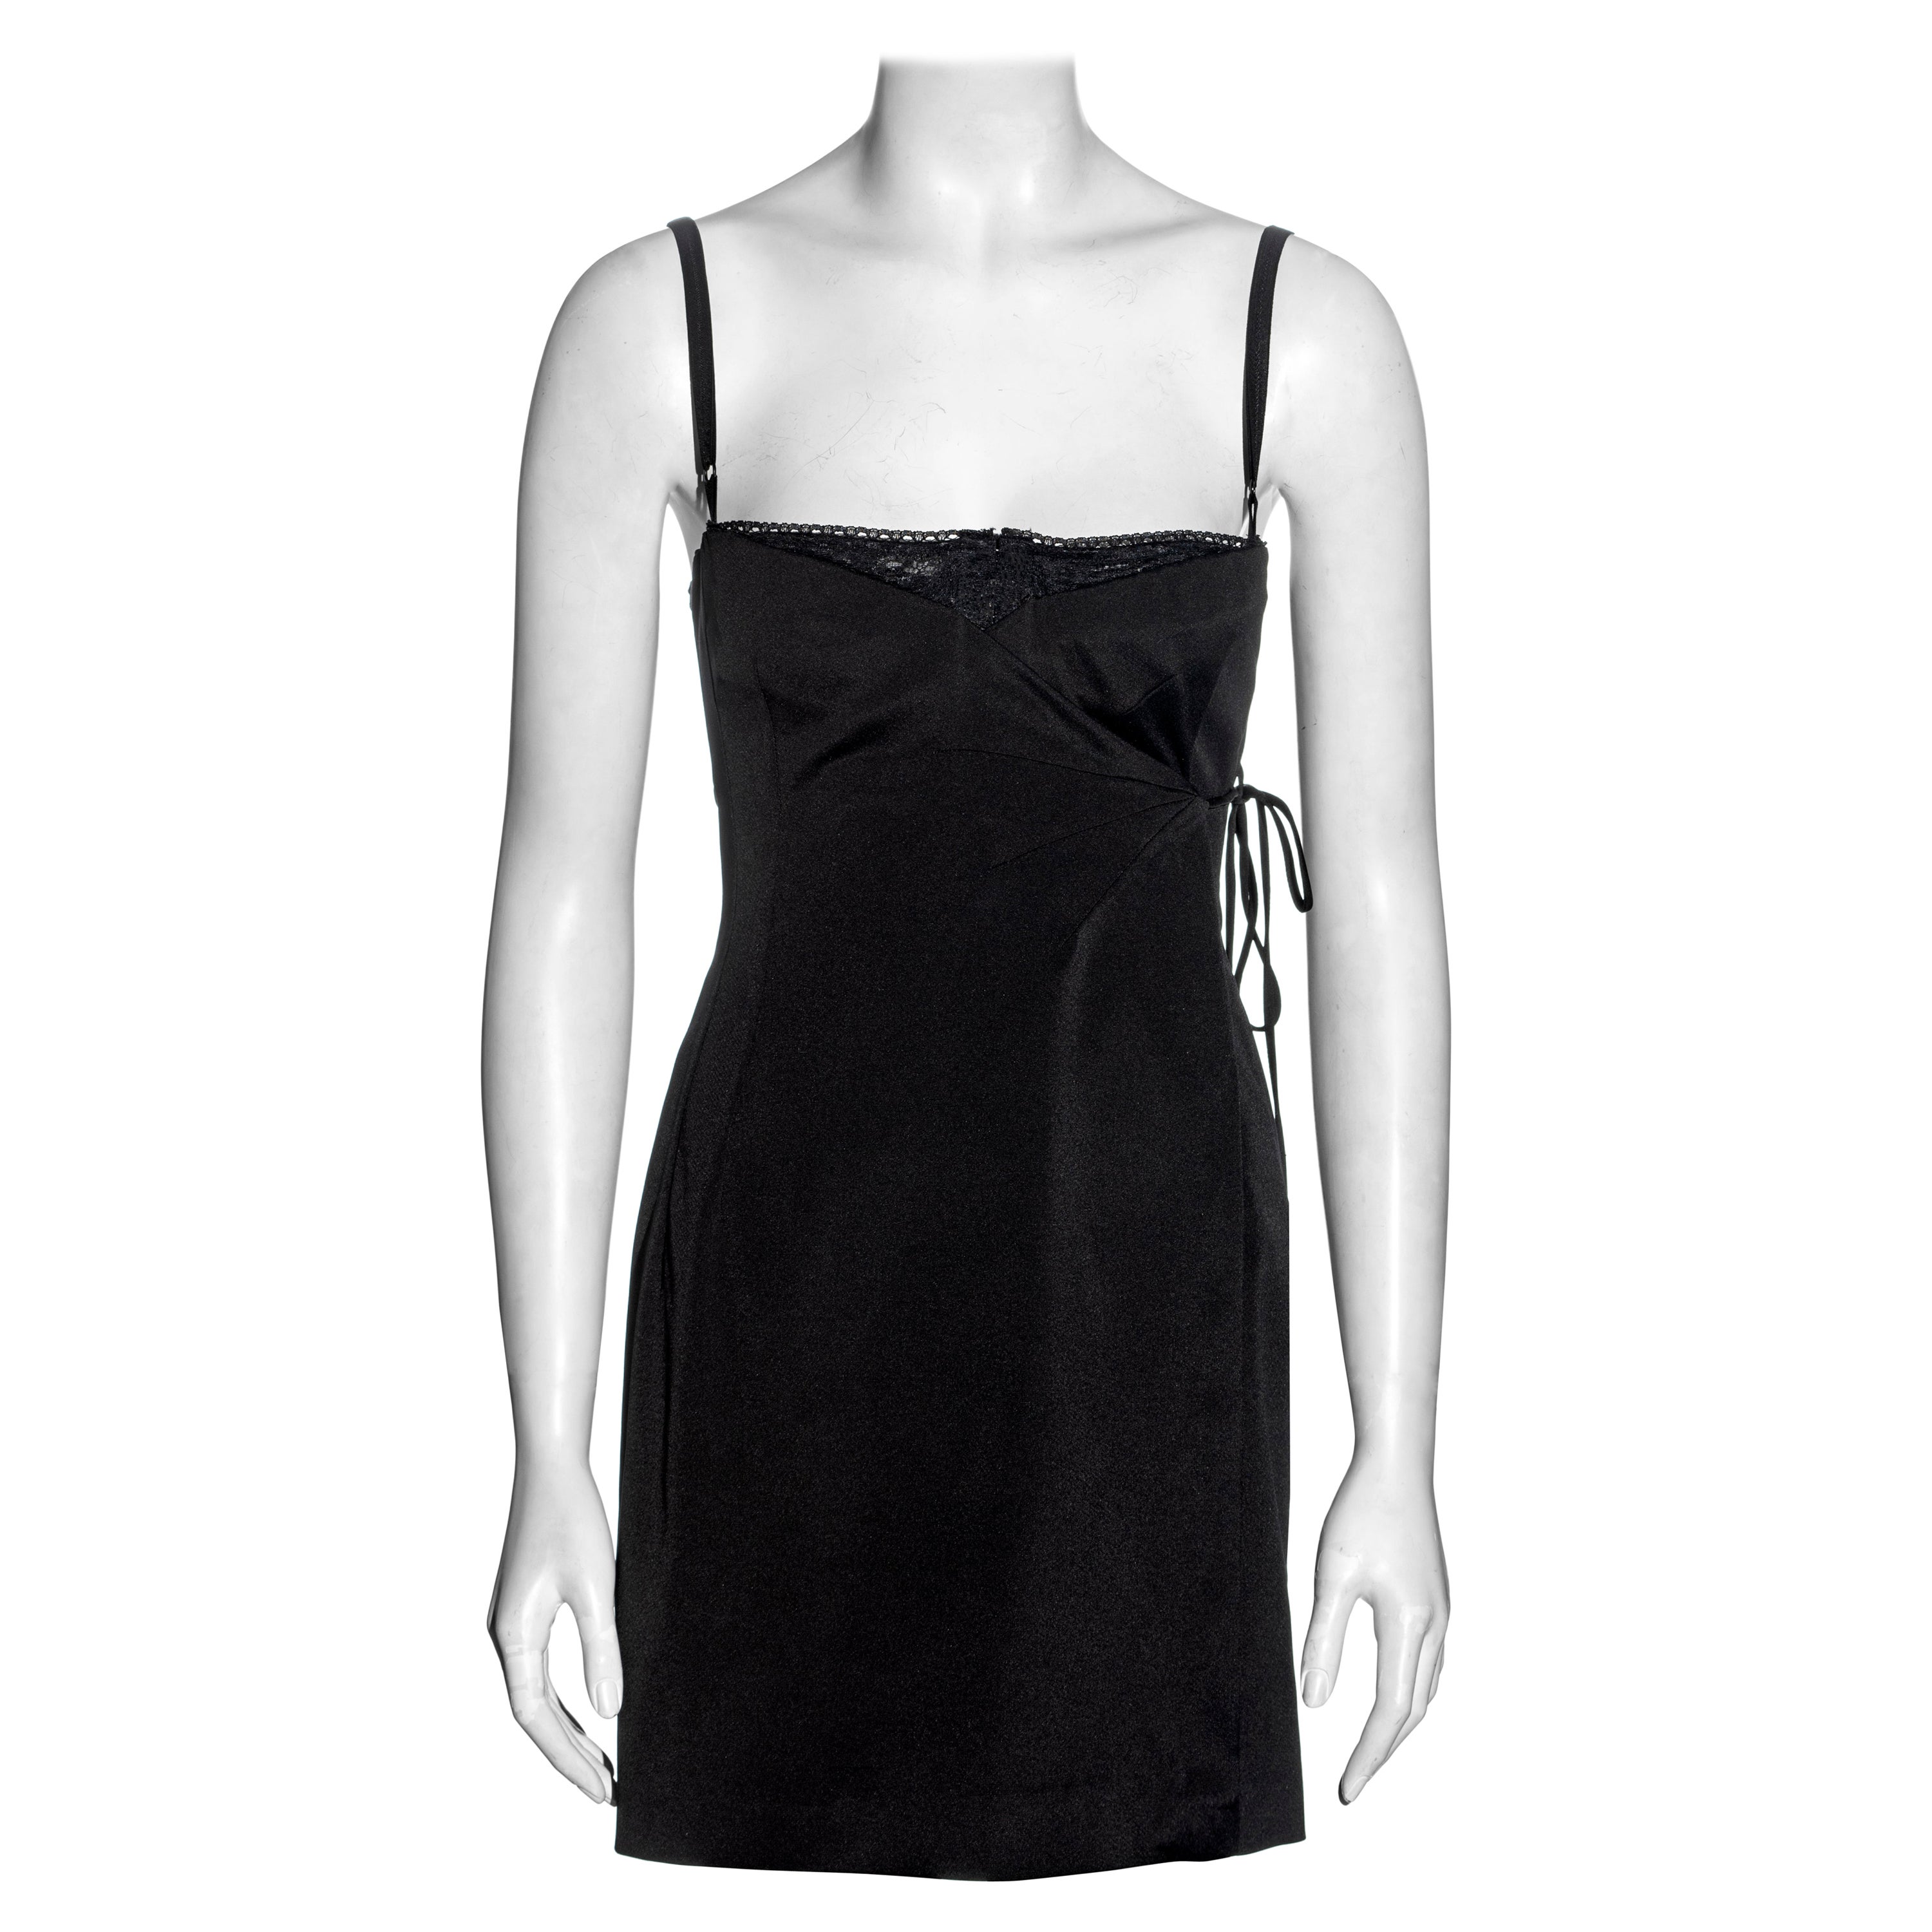 Dolce & Gabbana black mini wrap dress with built in corset bodysuit, fw 1997